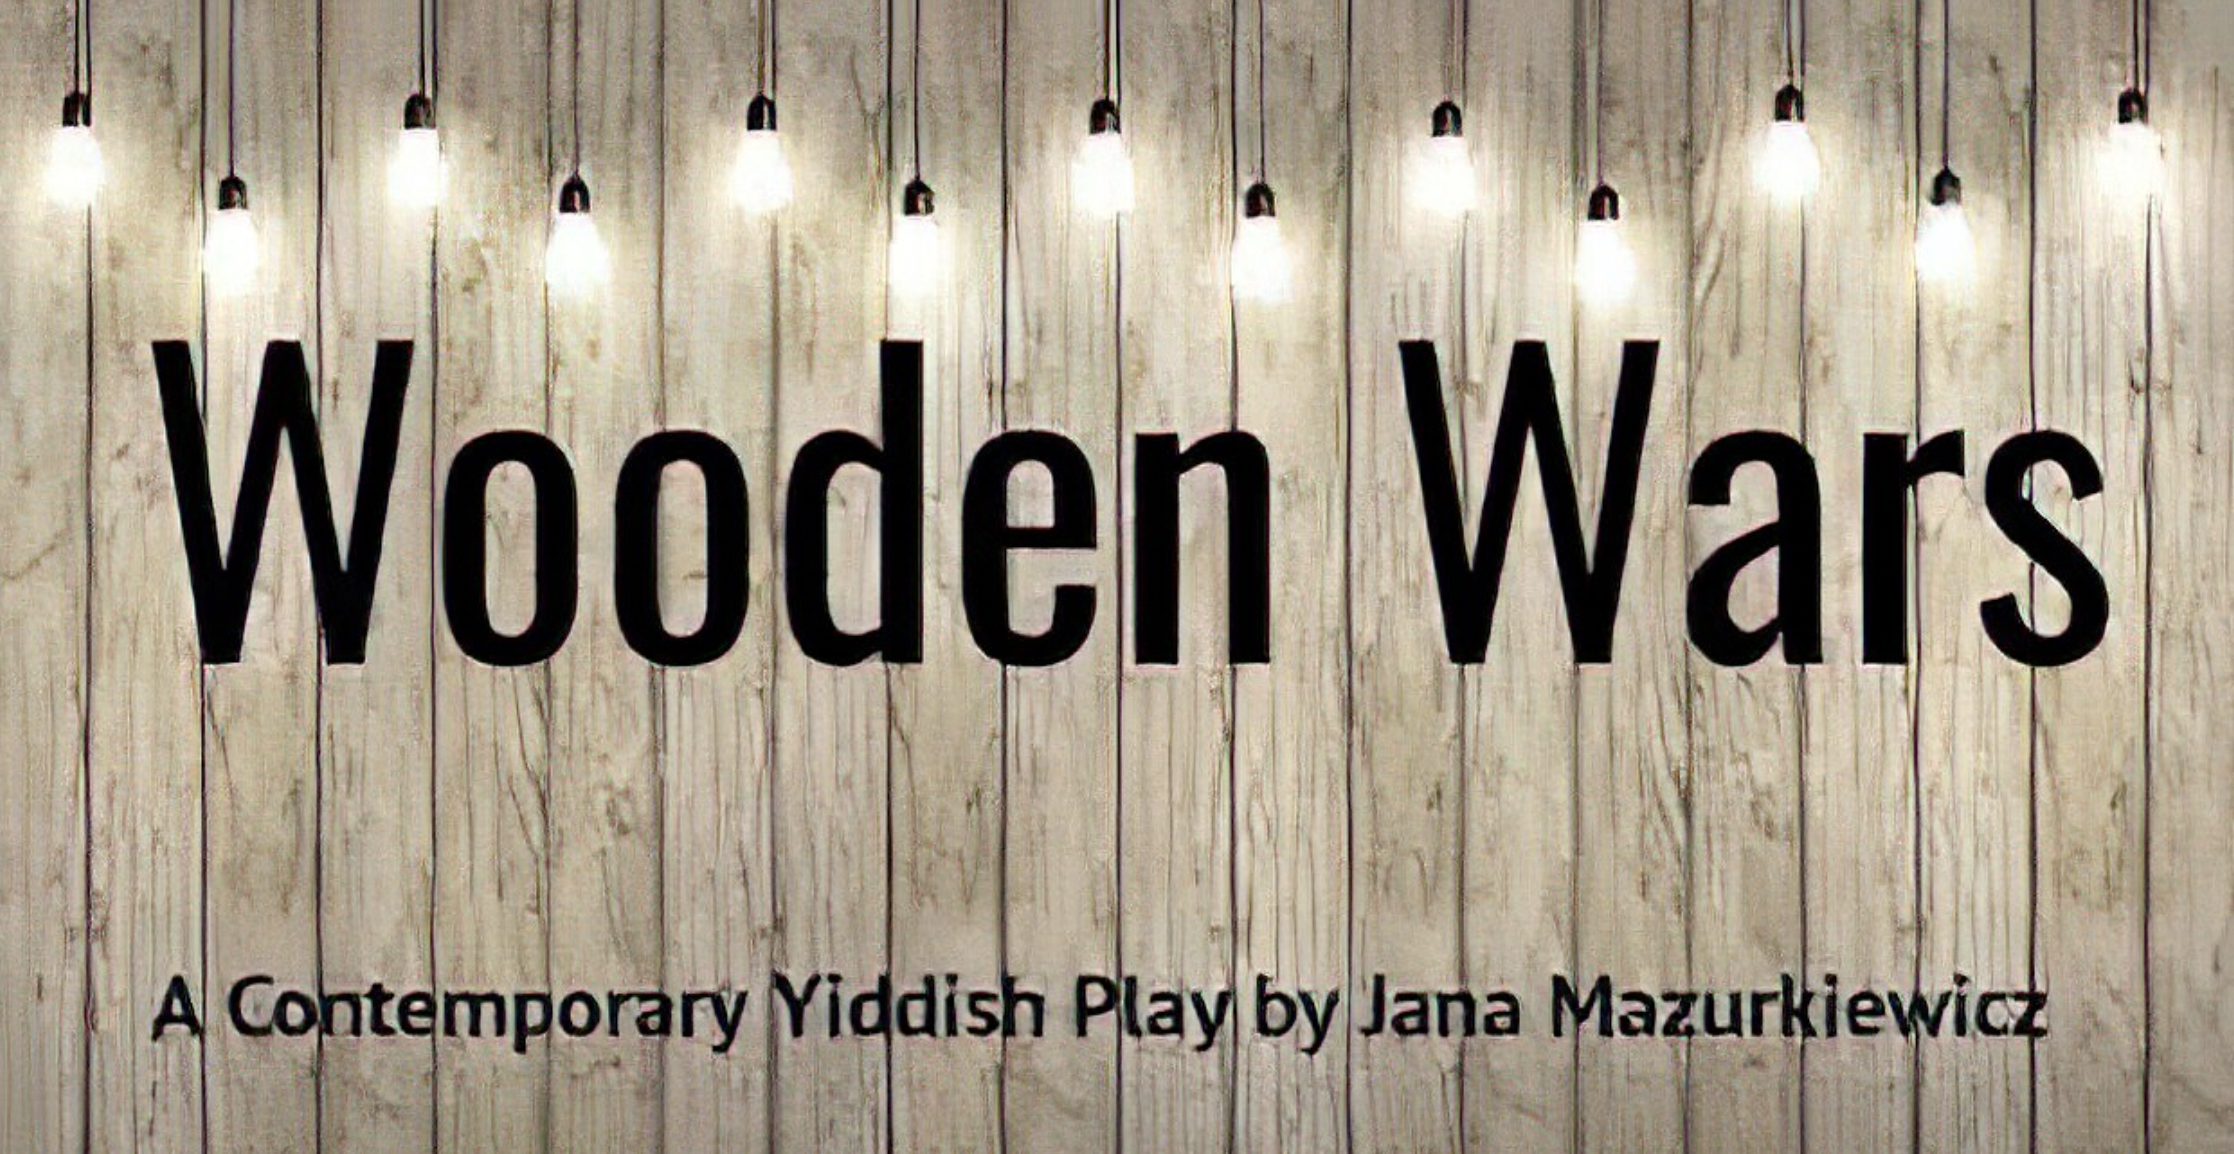 Wooden Wars, a contemporary Yiddish play by Jana Mazurkiewicz